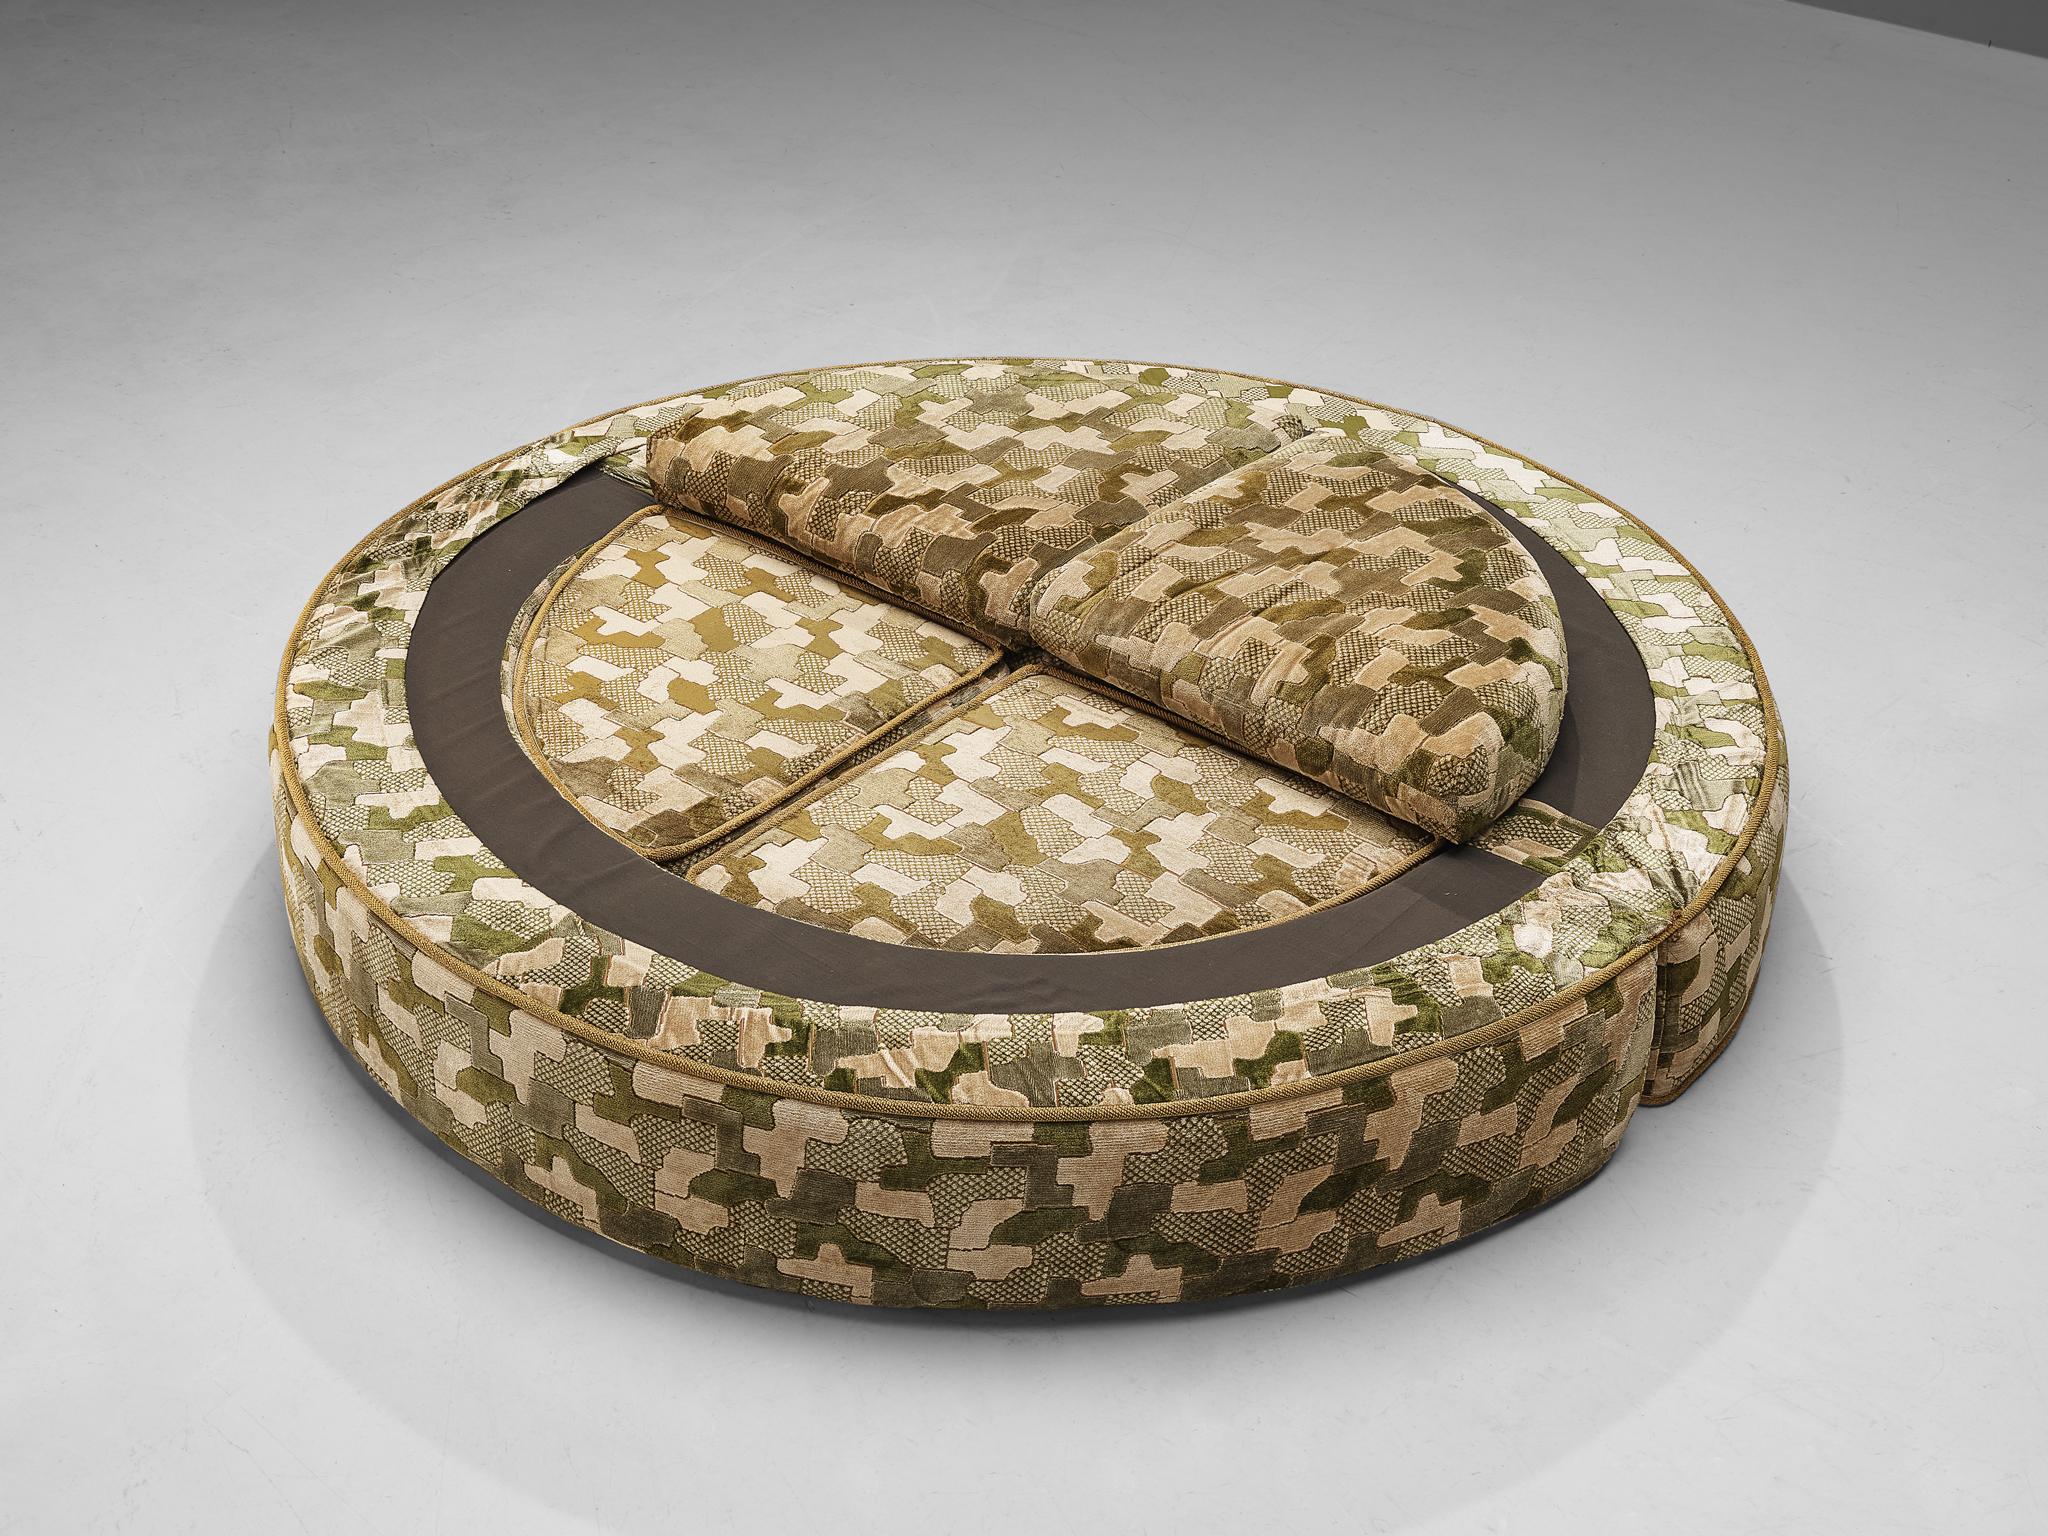 Italian Sofa Transformable to Bed in Patterned Velvet Upholstery 1